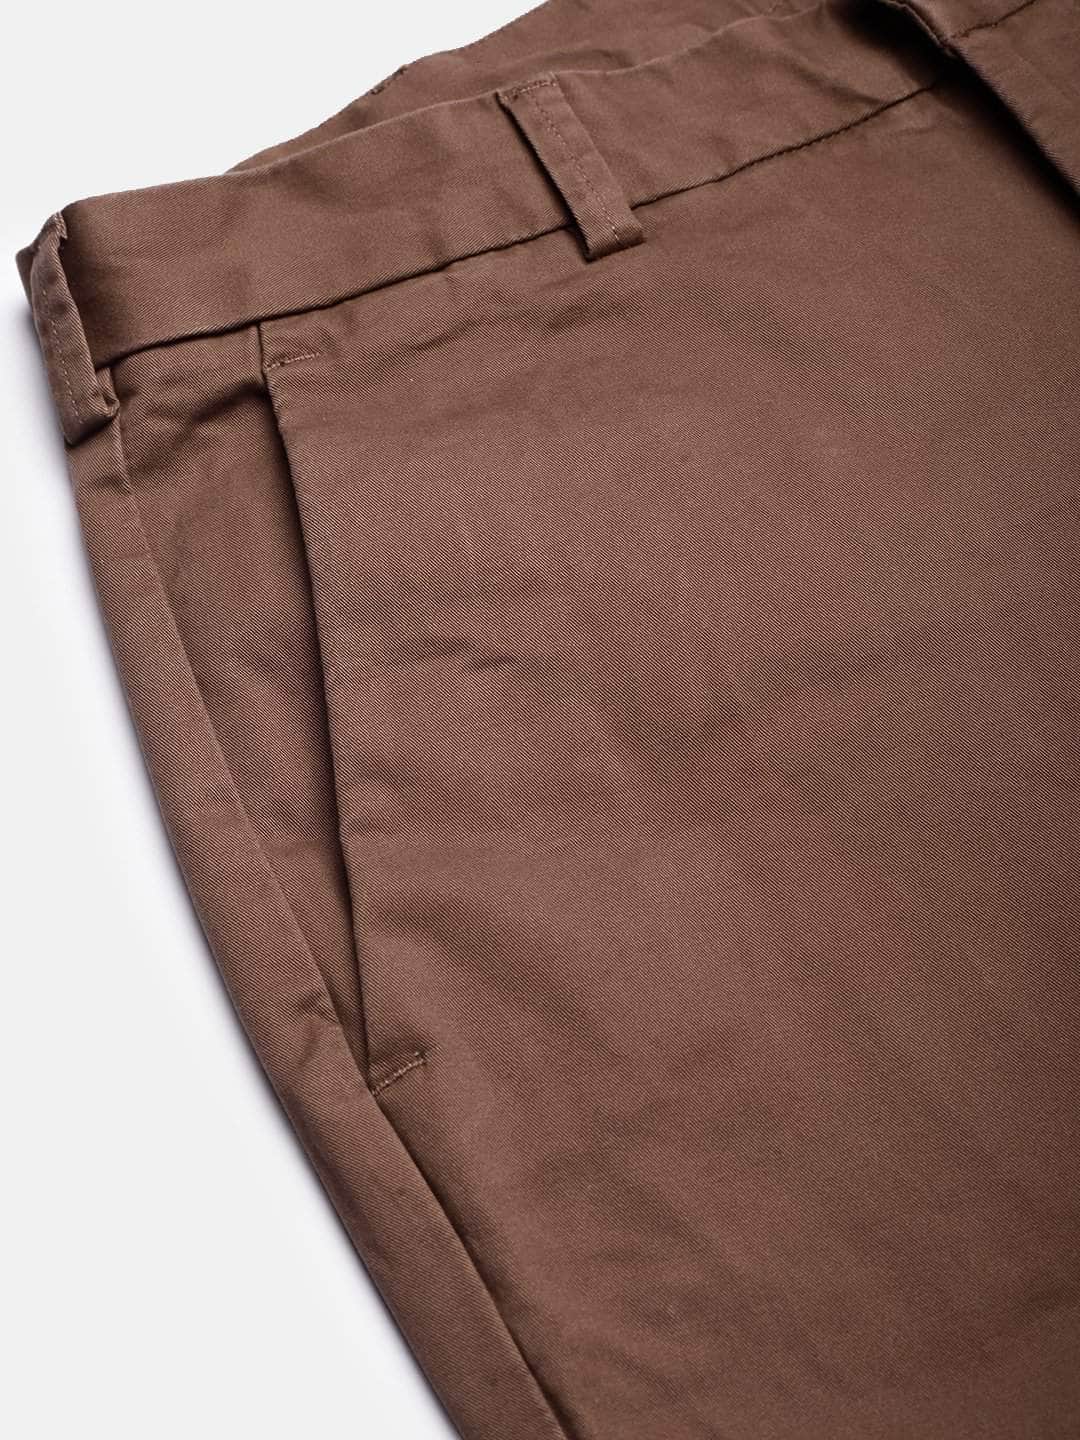 Brown Formal Pants  ASHTAG